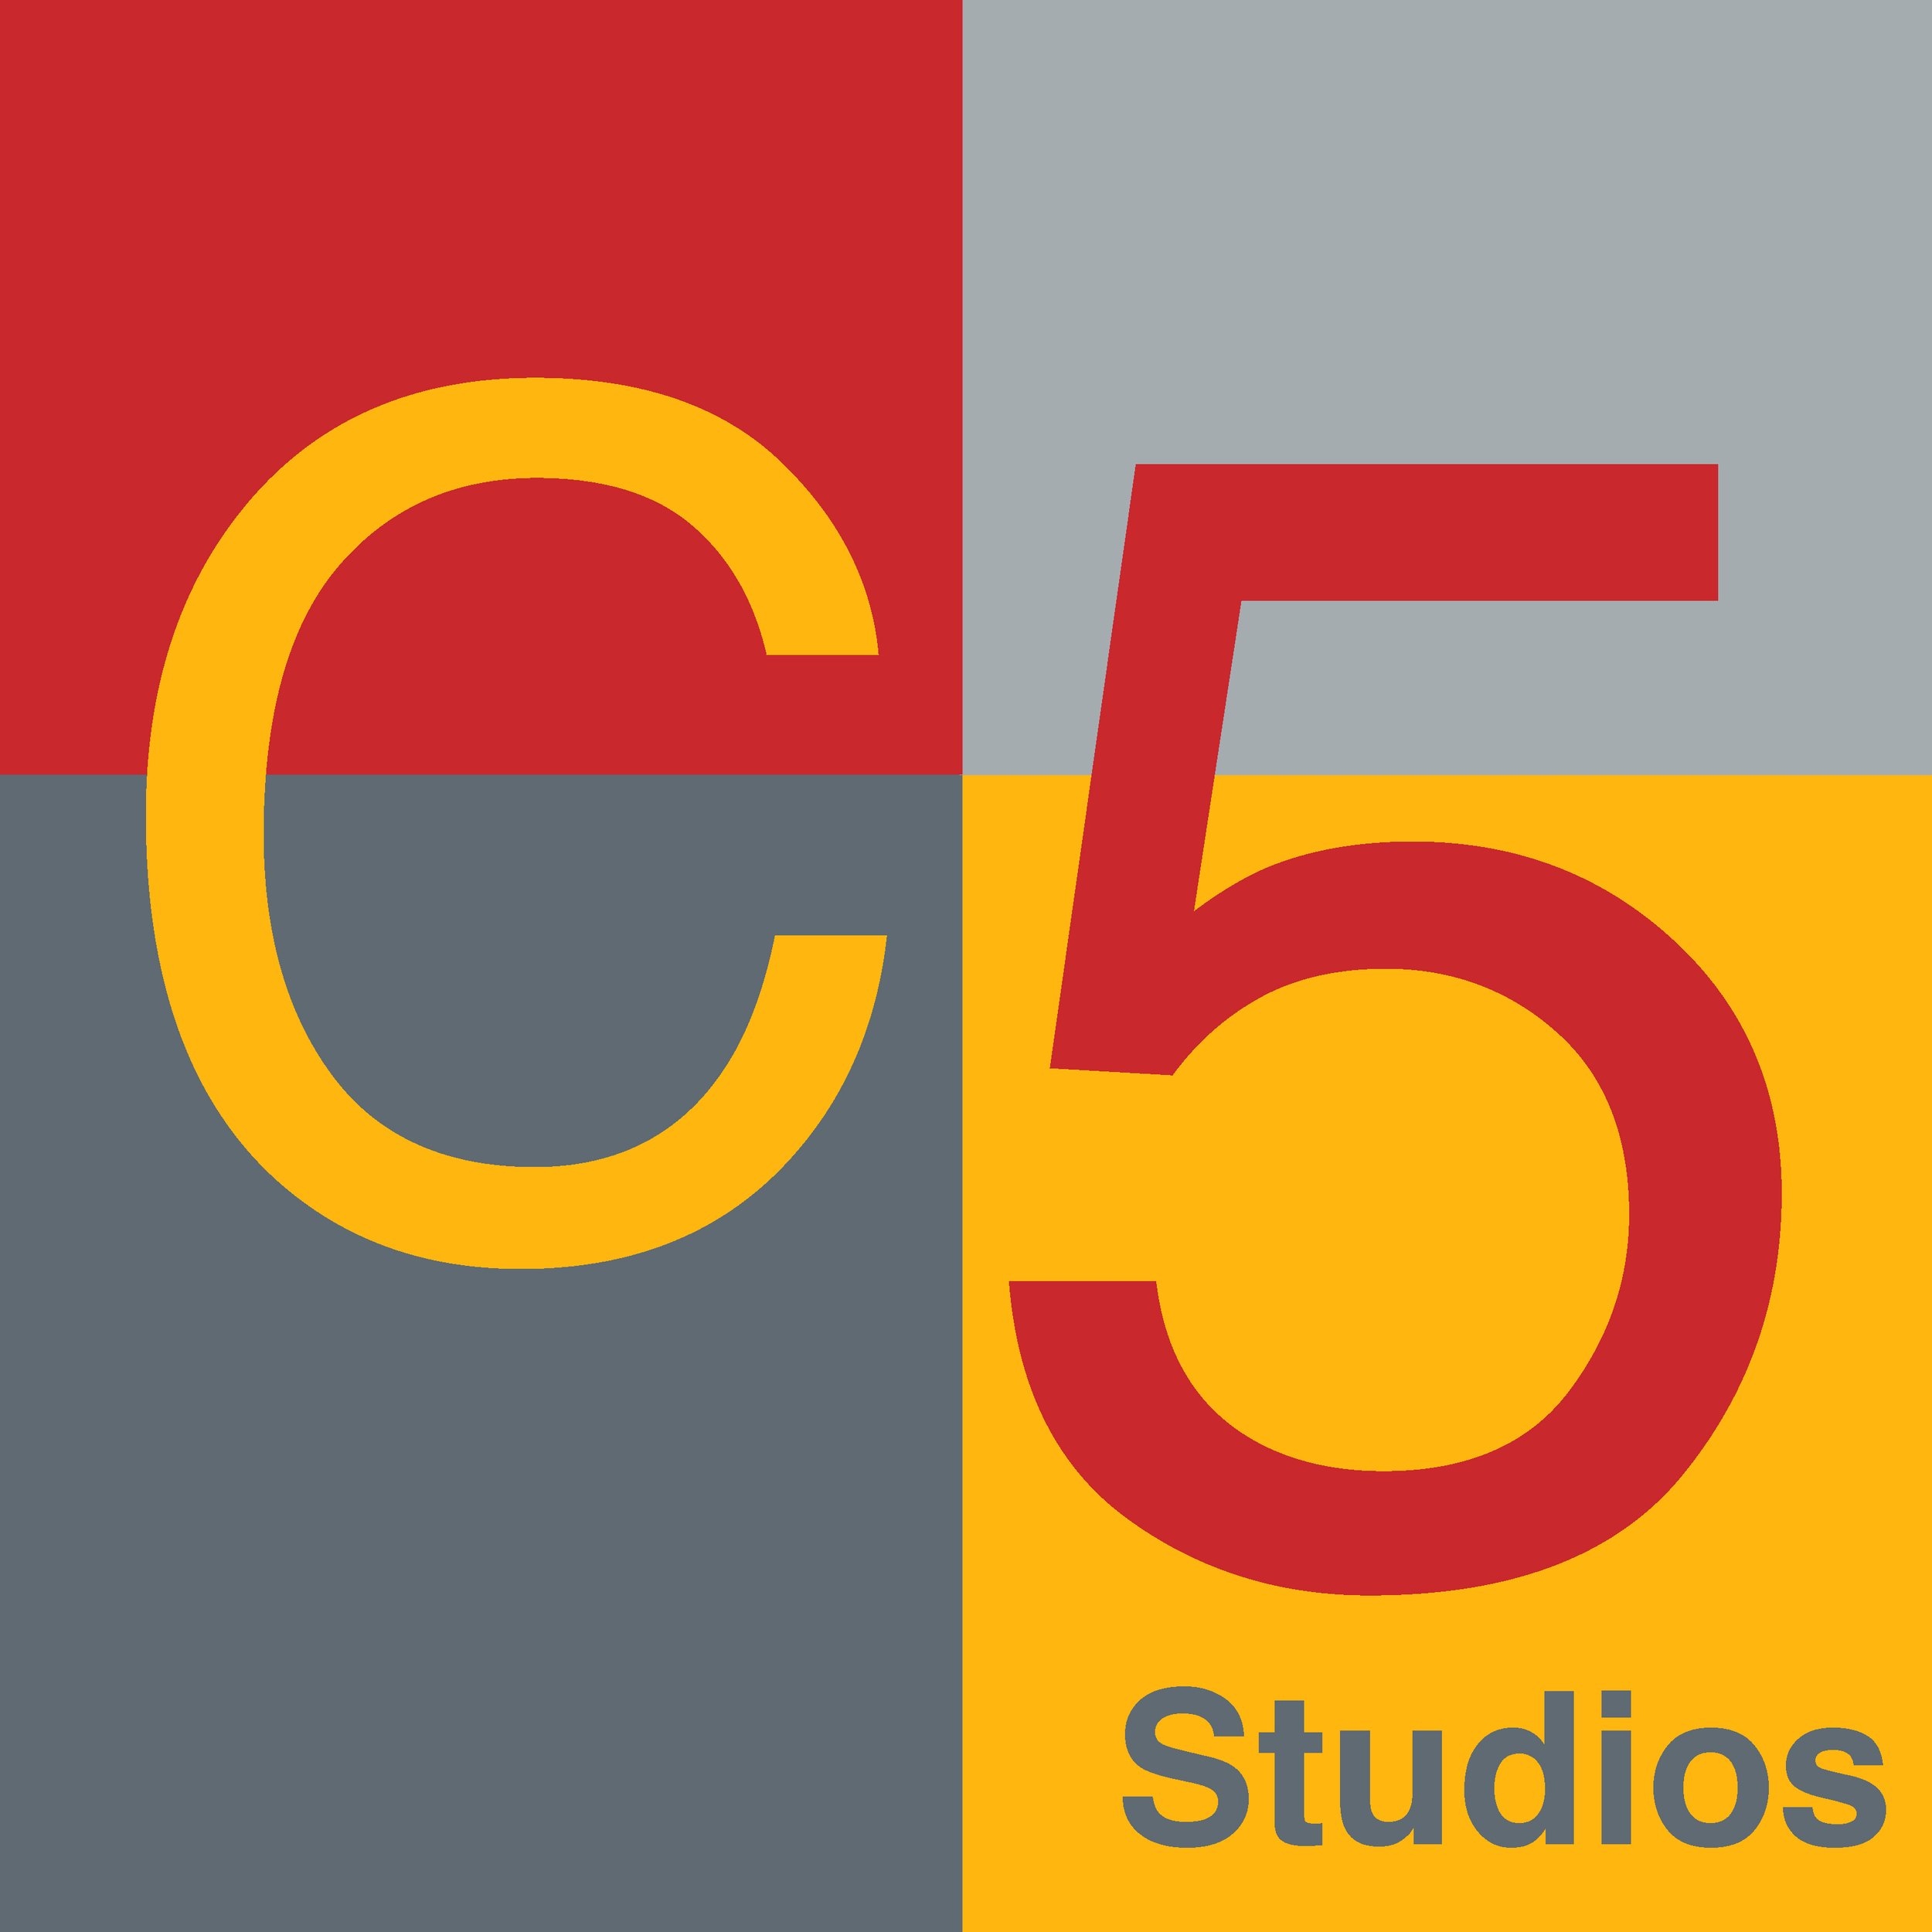 C5 Studios logo squareORANGE.jpg